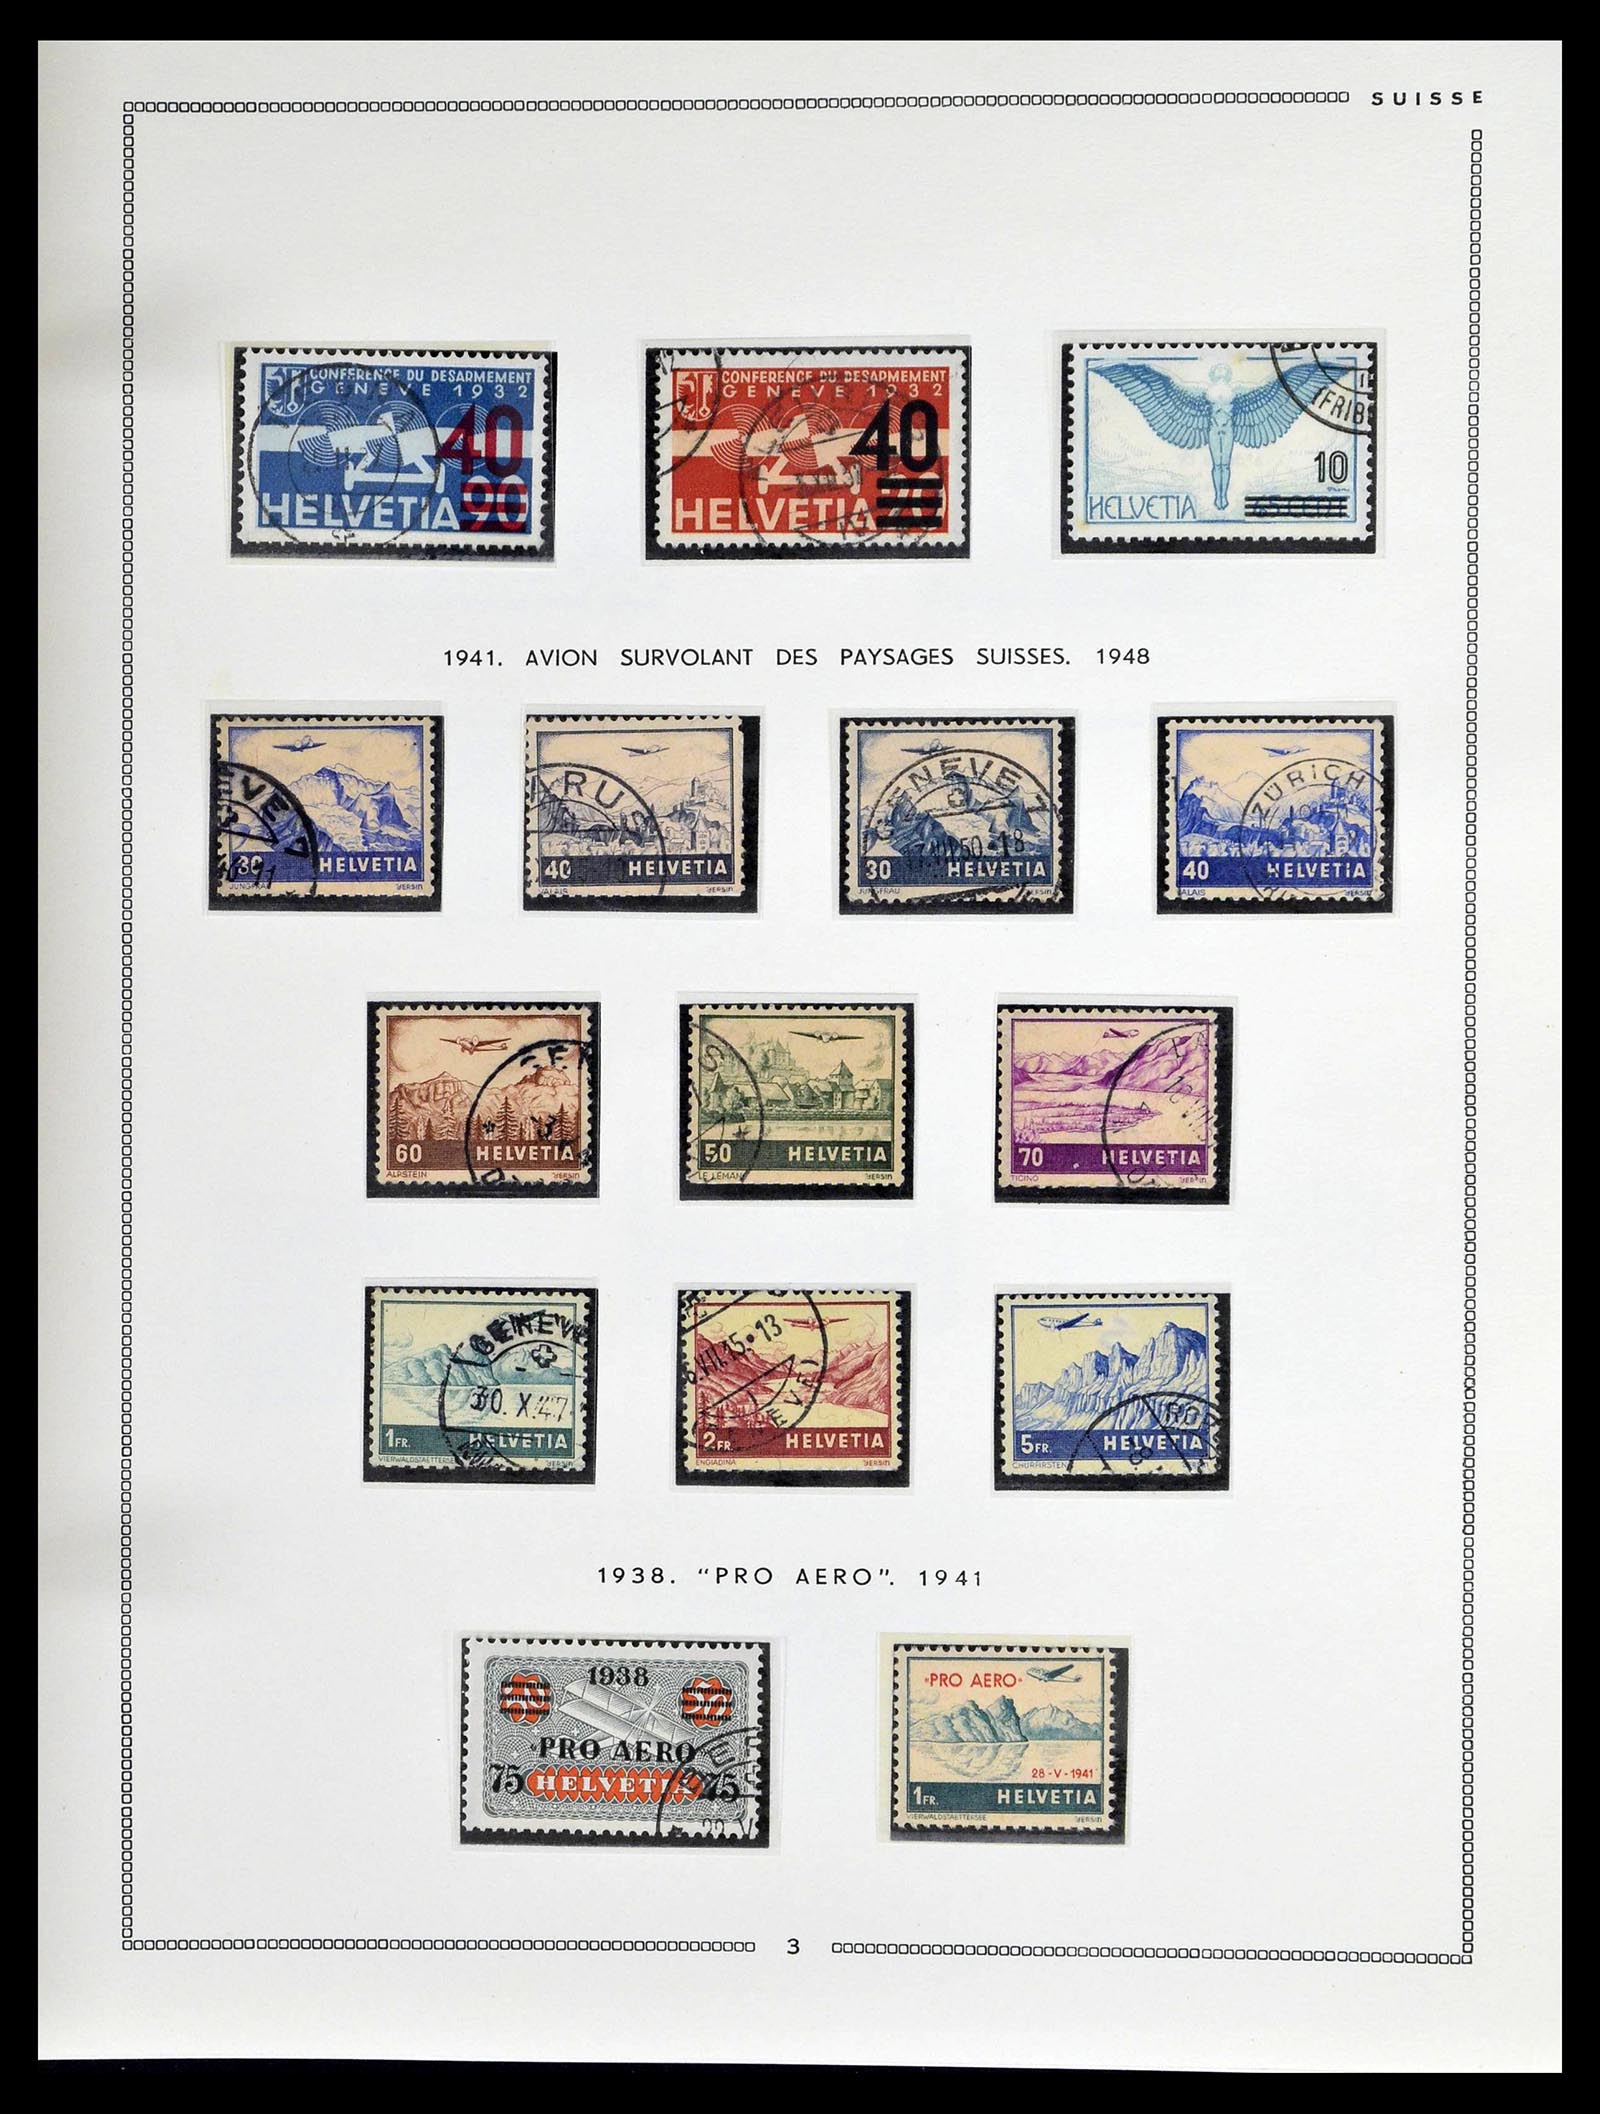 39094 0154 - Stamp collection 39094 Switzerland 1850-2005.